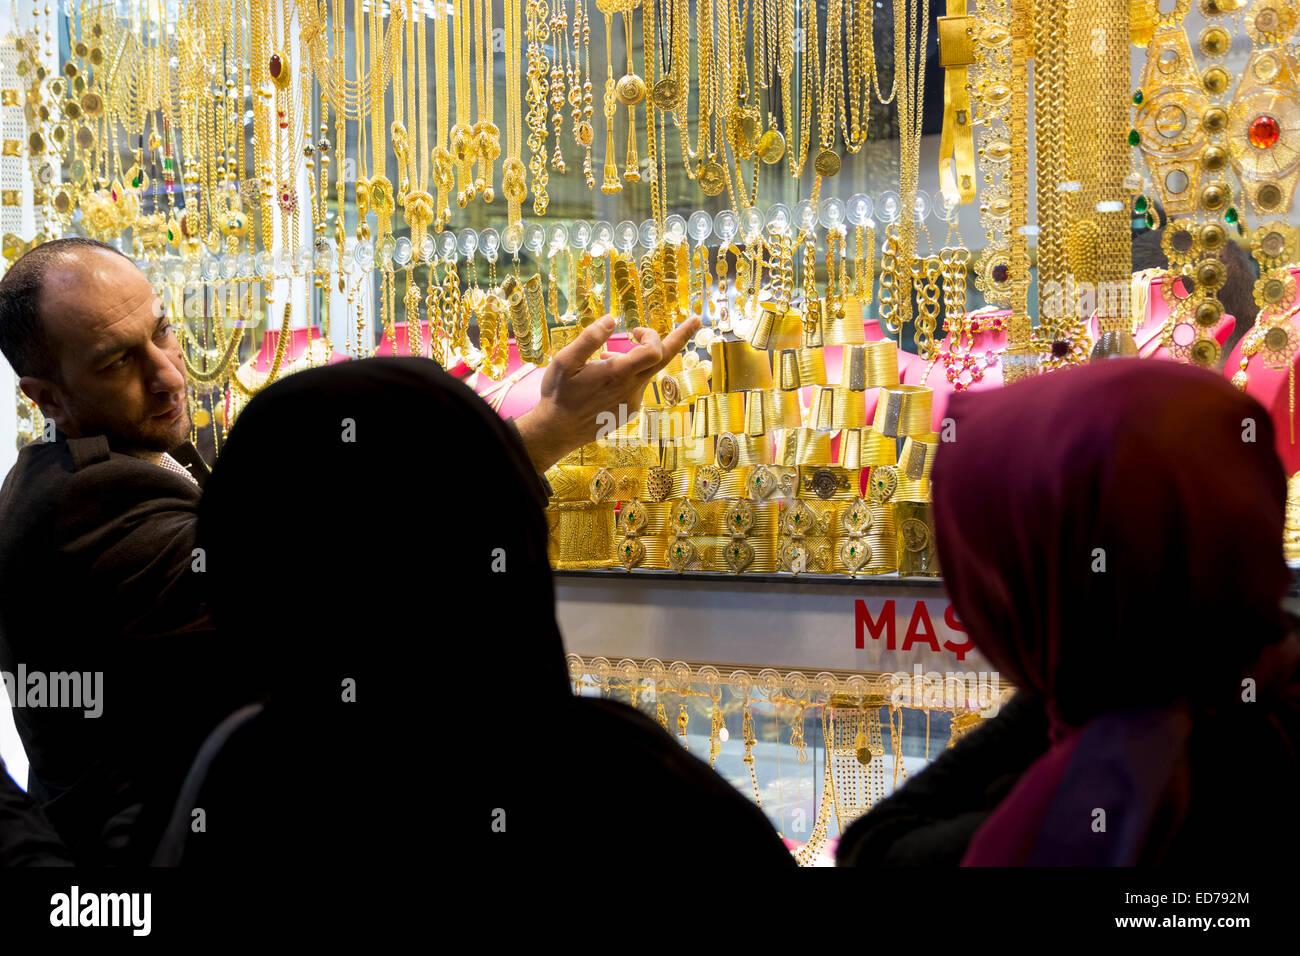 Muslim women at jewelry shop in The Grand Bazaar, Kapalicarsi, great market in Beyazi, Istanbul, Turkey Stock Photo